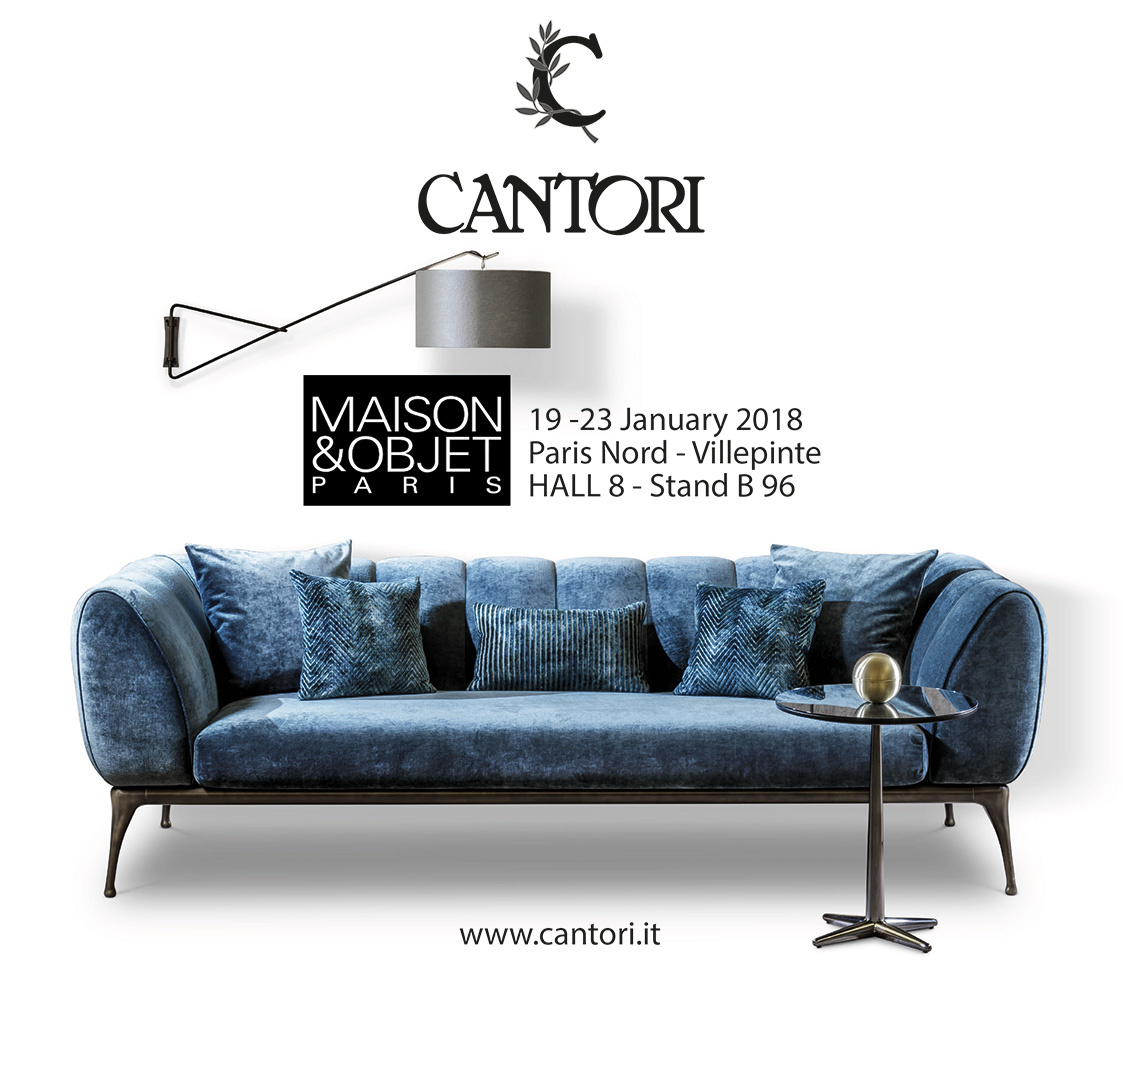 07/12/2017 Cantori al Maison & Objet di Parigi 2018 - Cantori